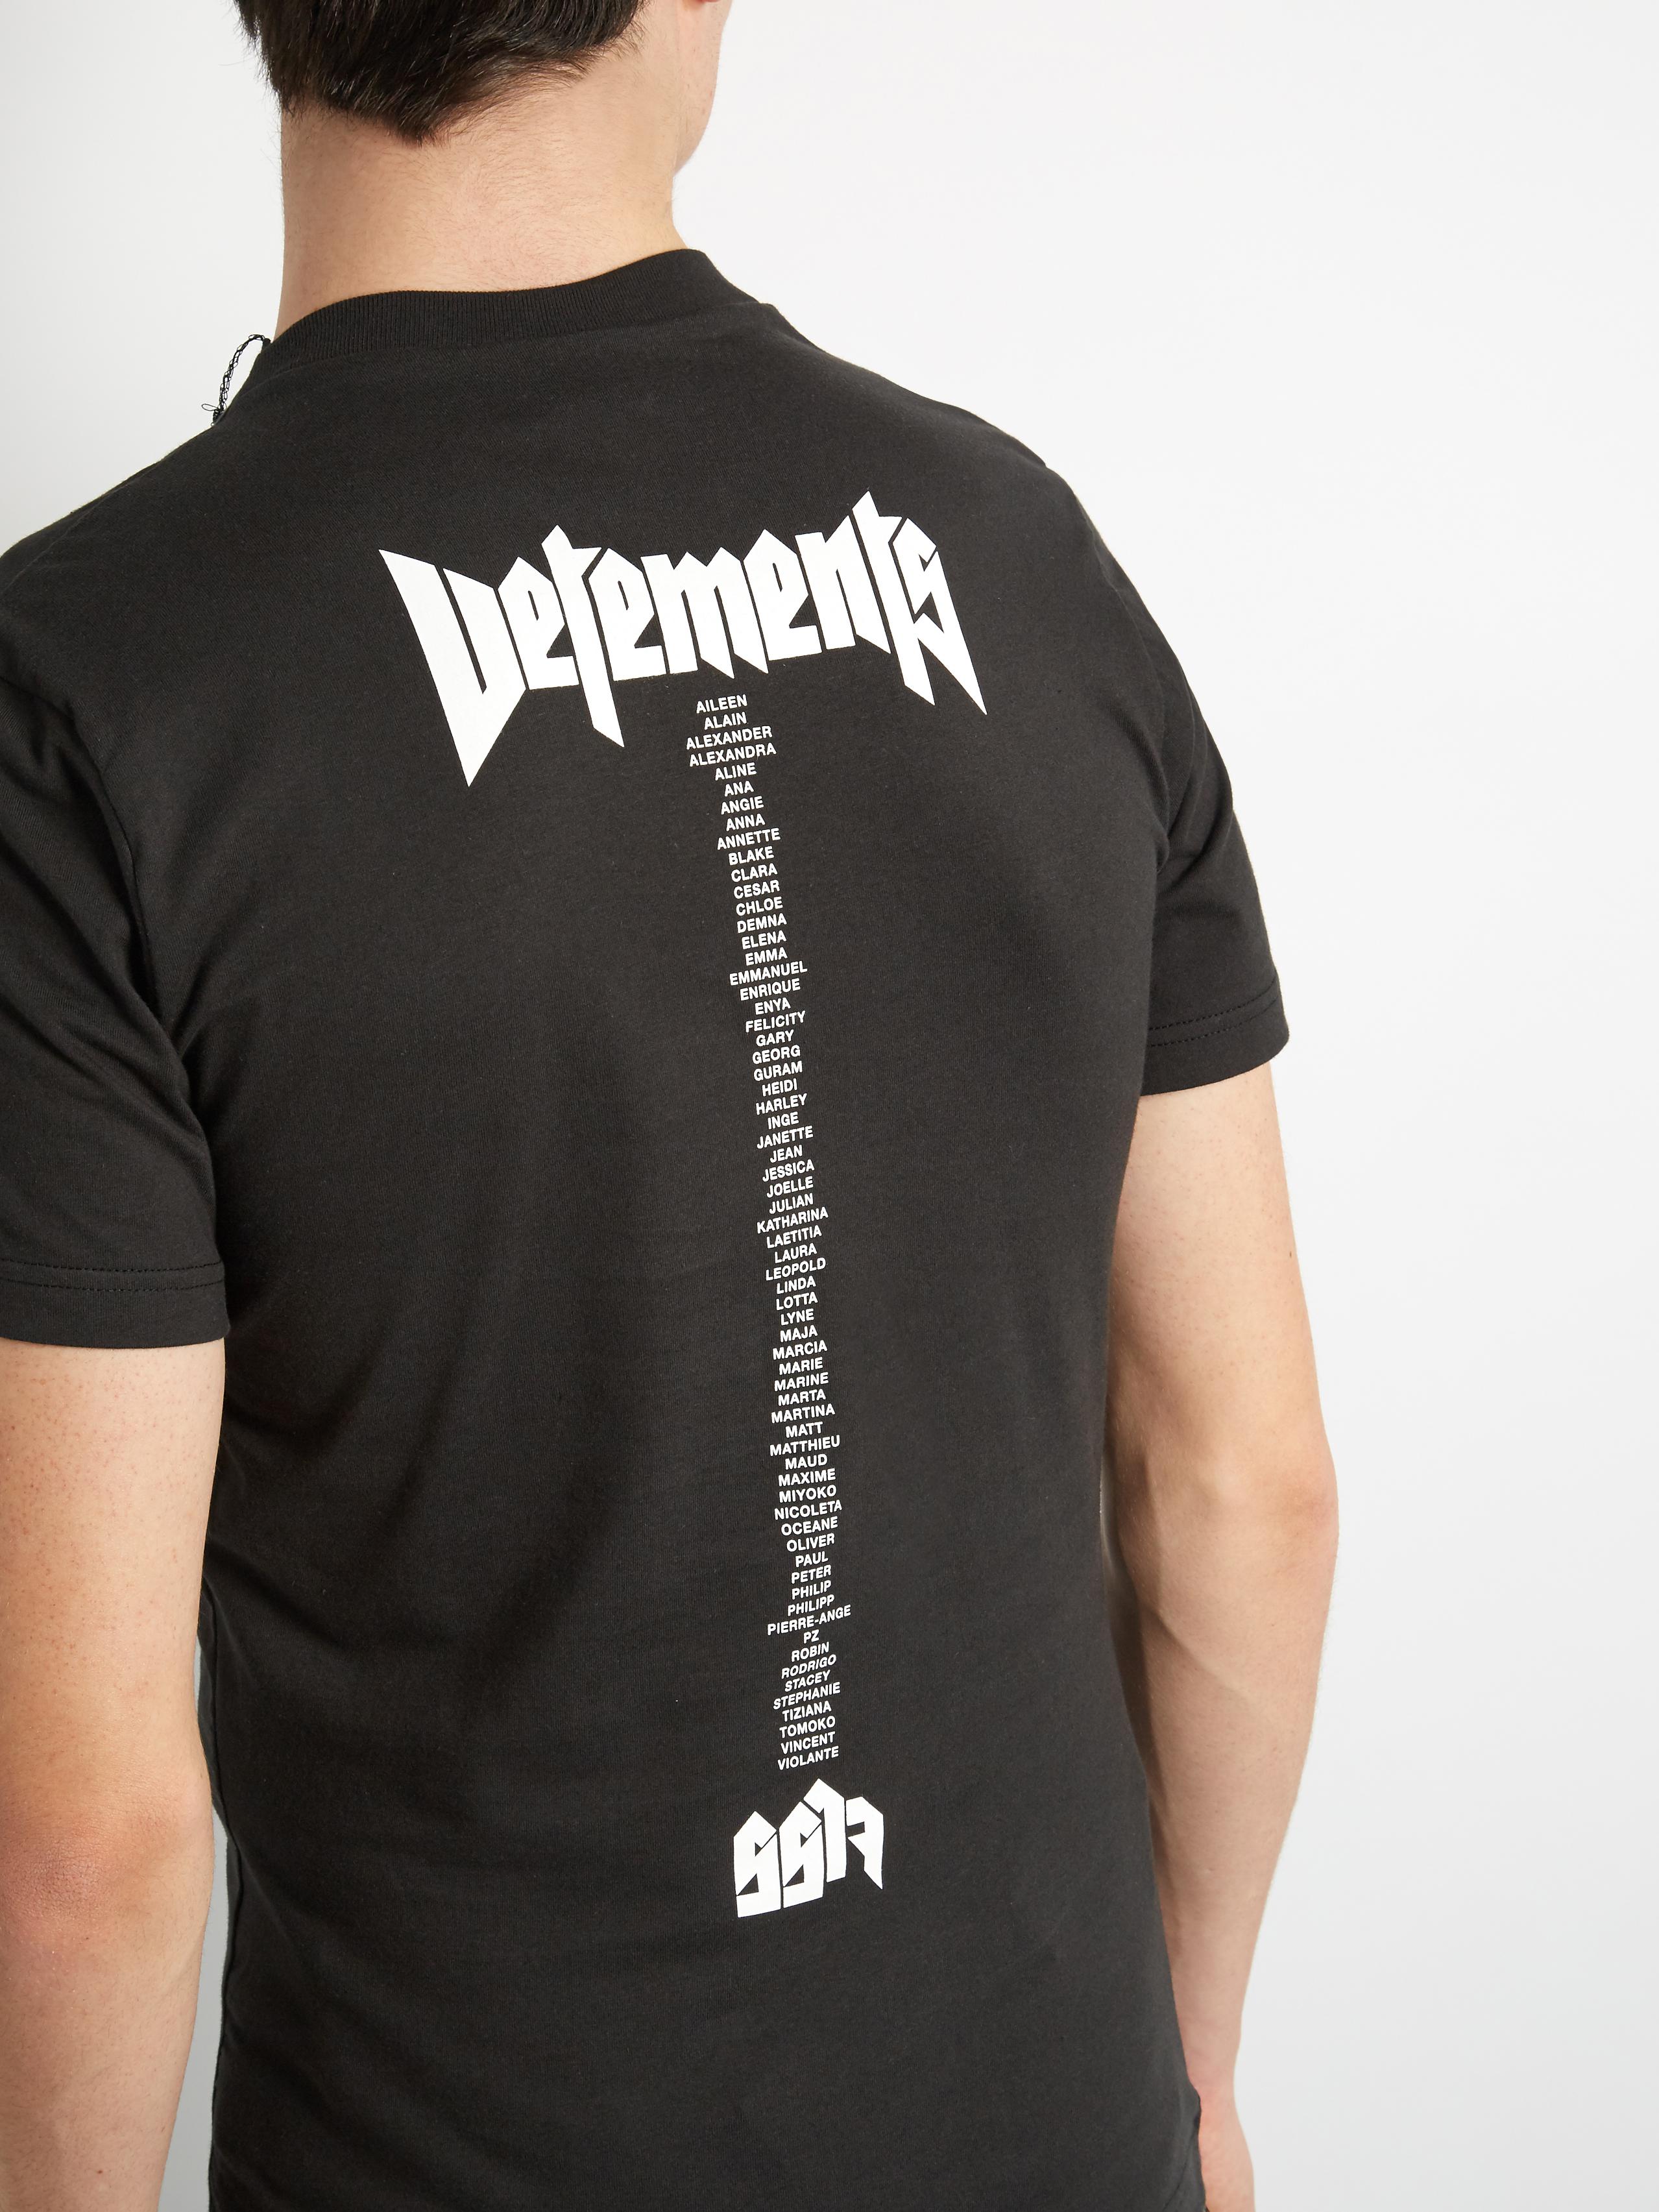 Vetements X Hanes Staff Cotton T-shirt in Black for Men | Lyst